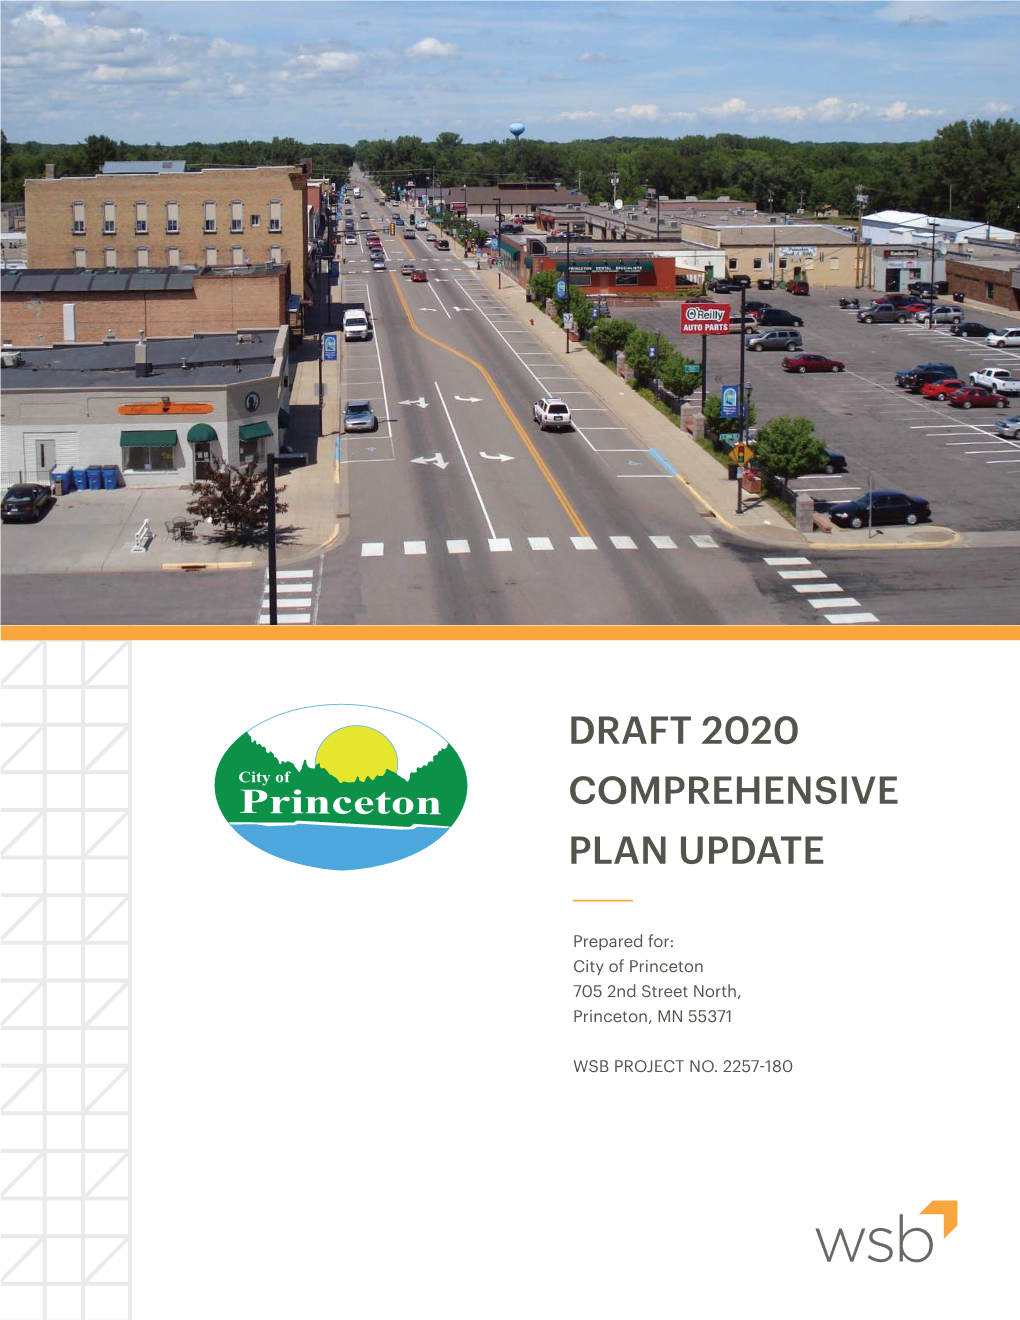 Draft 2020 Comprehensive Plan Update